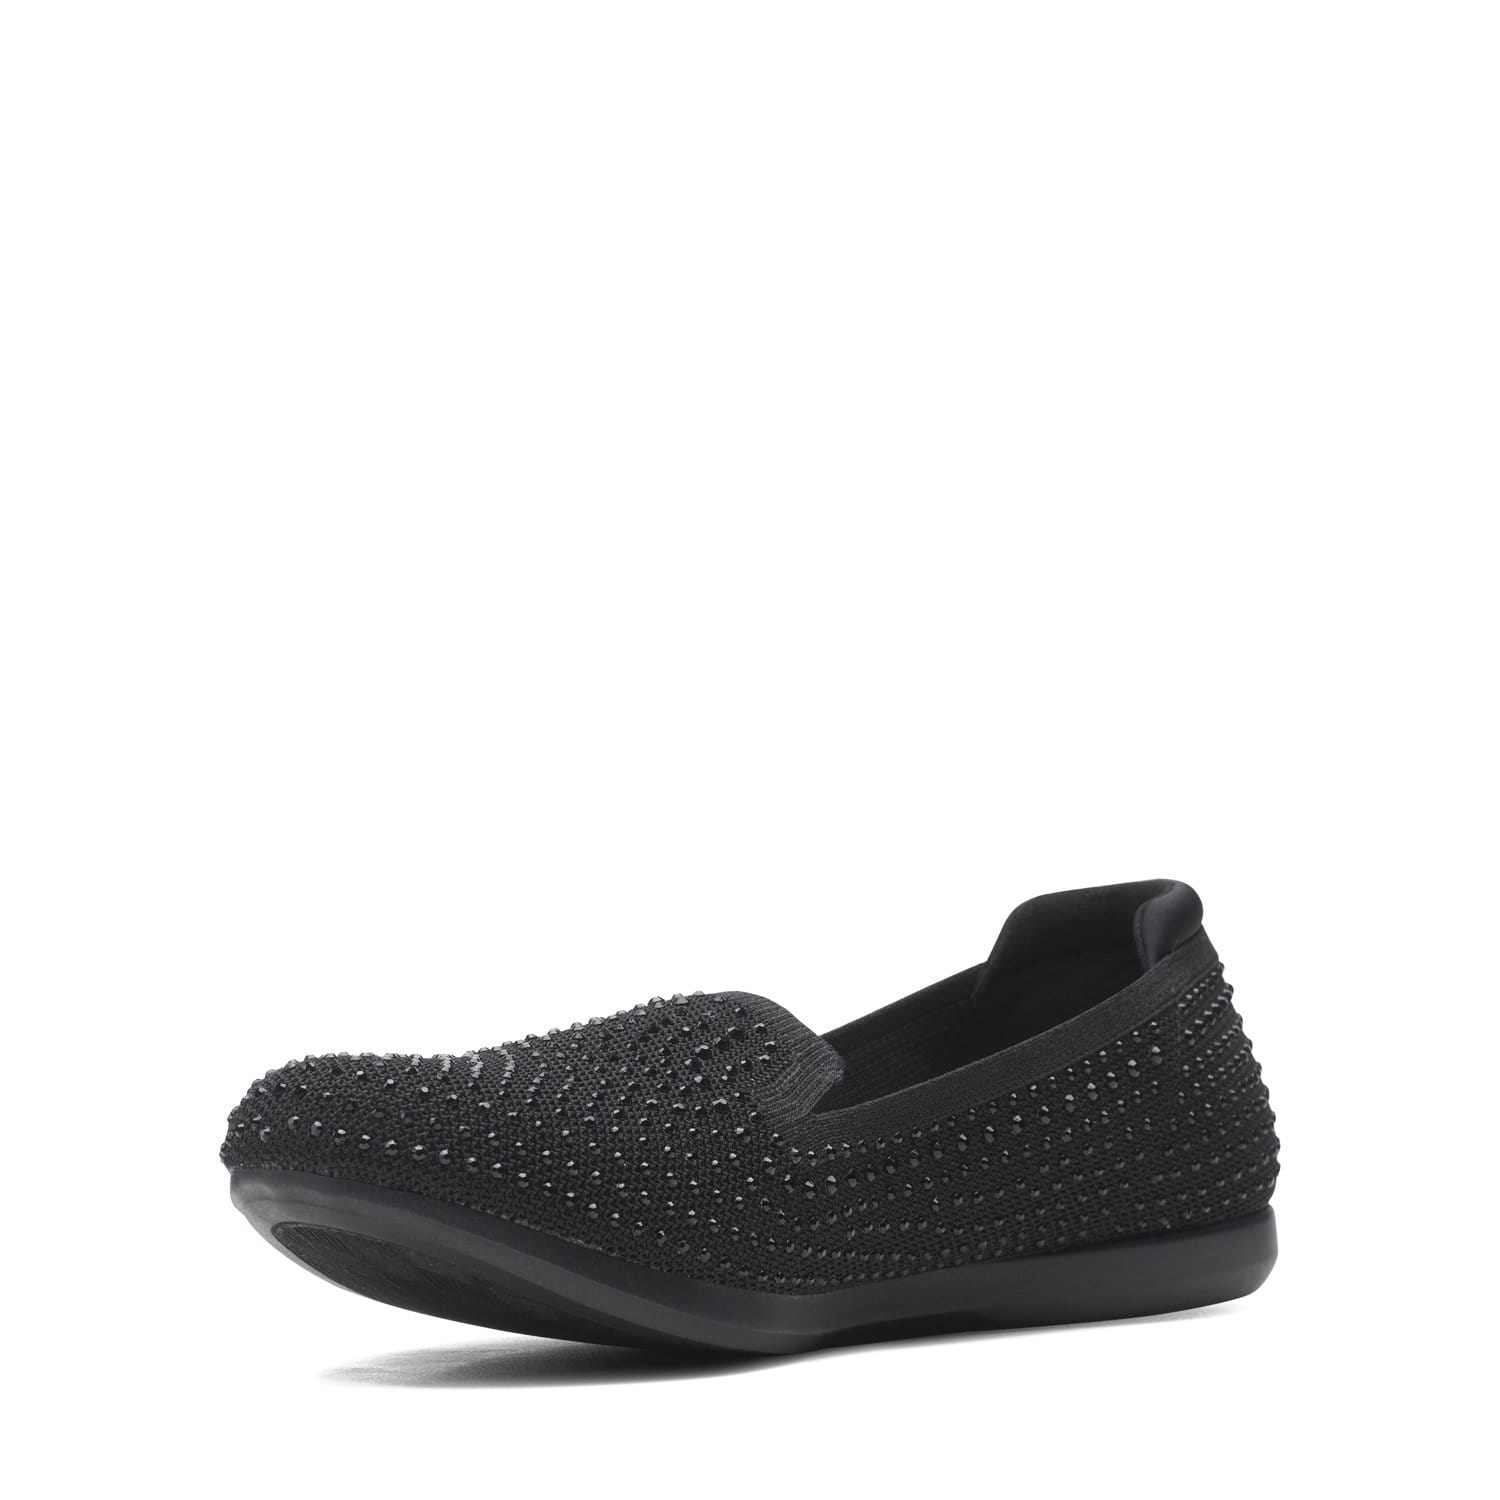 Clarks Carly Dream - Shoes - Black Textile - 261569154 - D Width (Standard Fit)